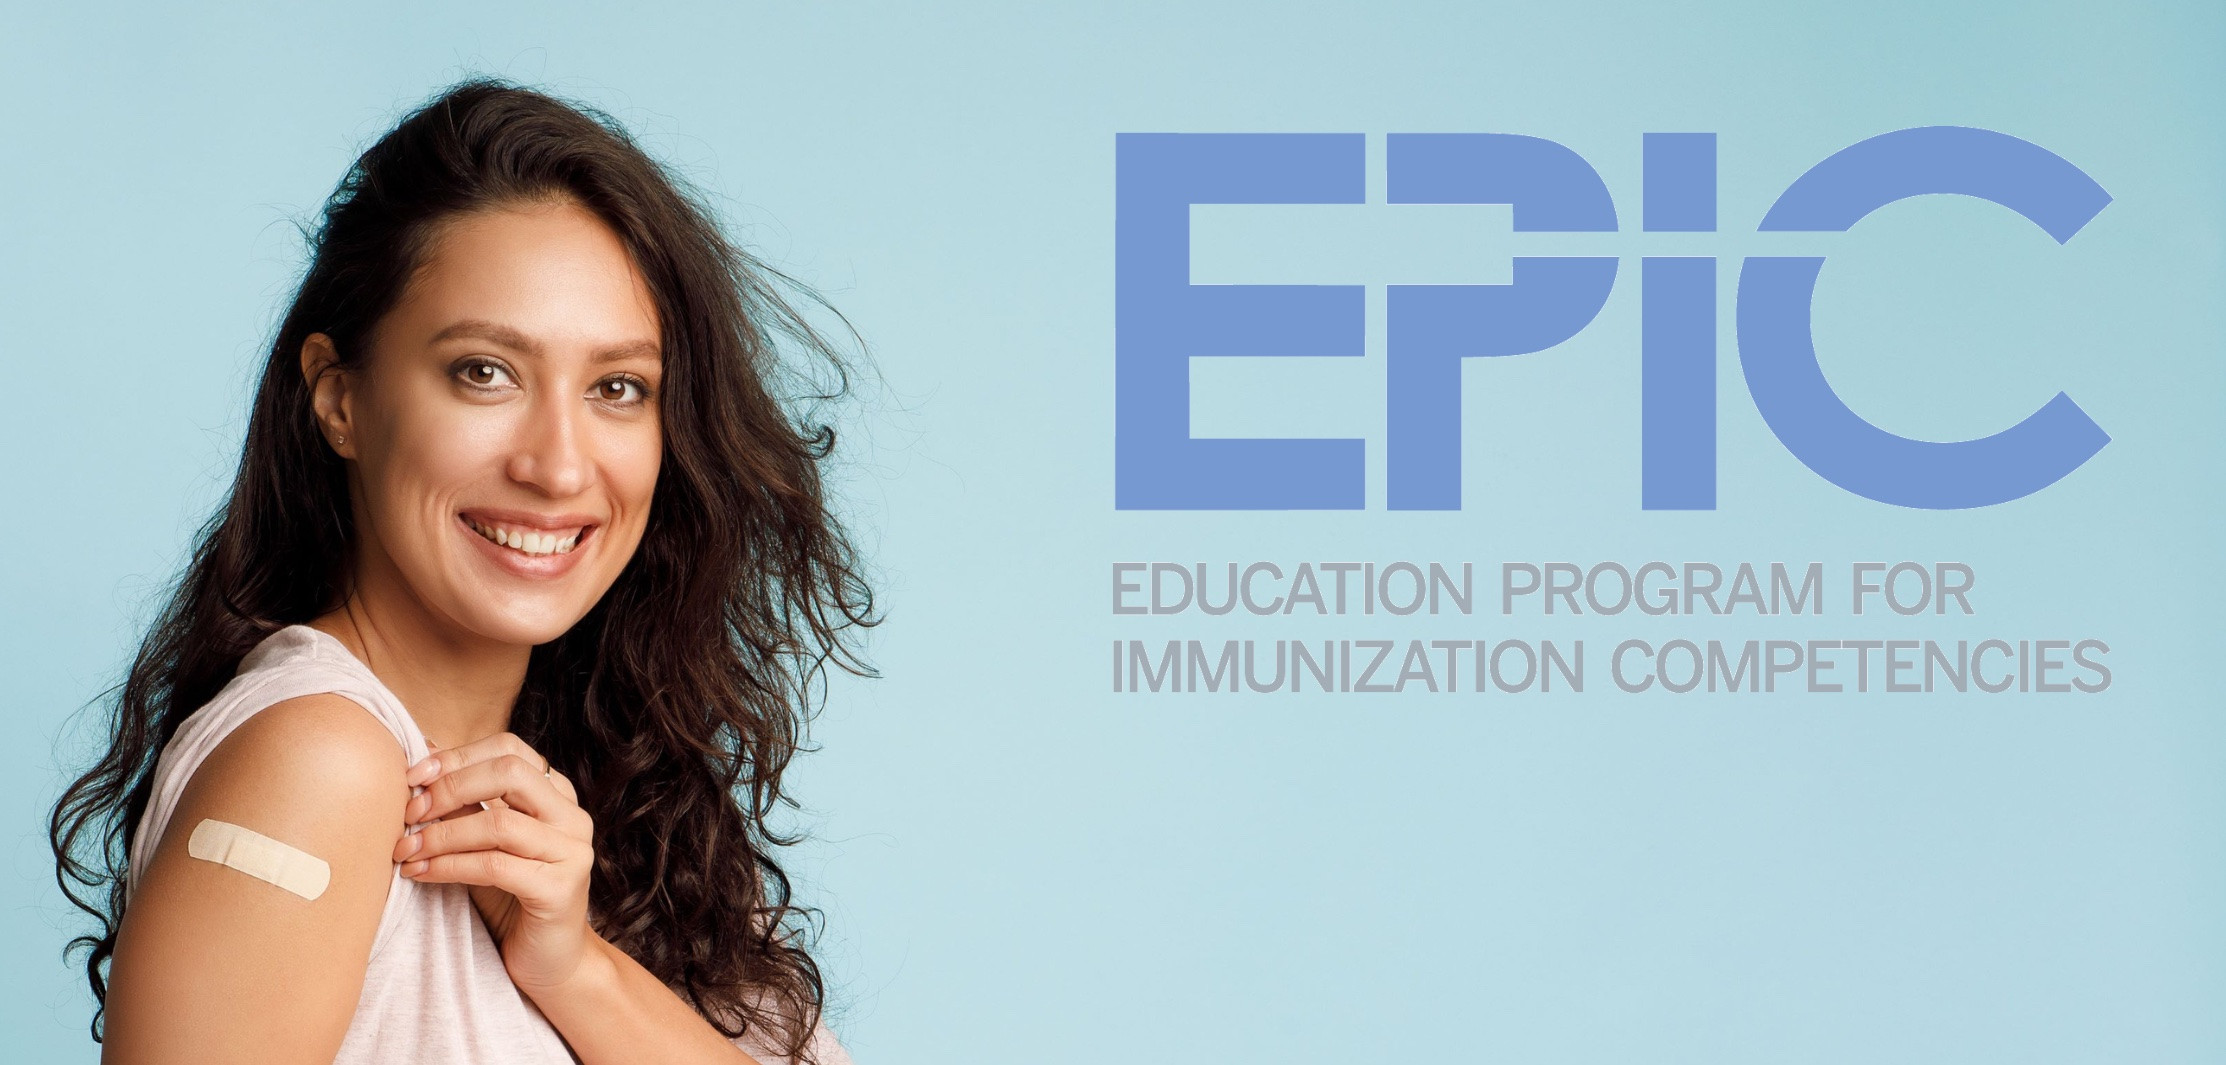 Education Program for Immunization Competencies